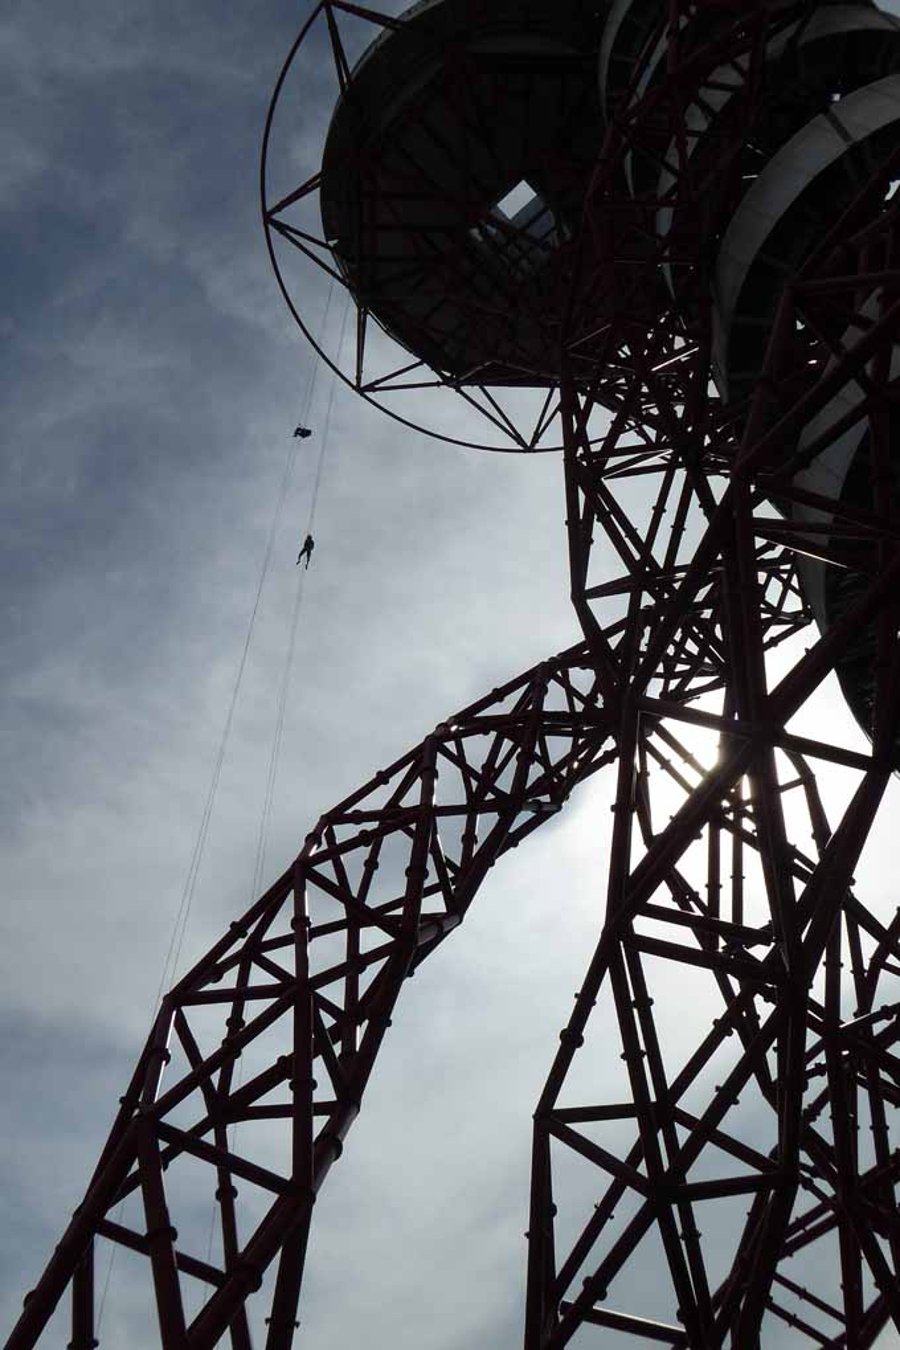 2012 Olympics ArcelorMittal Orbit Tower Photograph Print